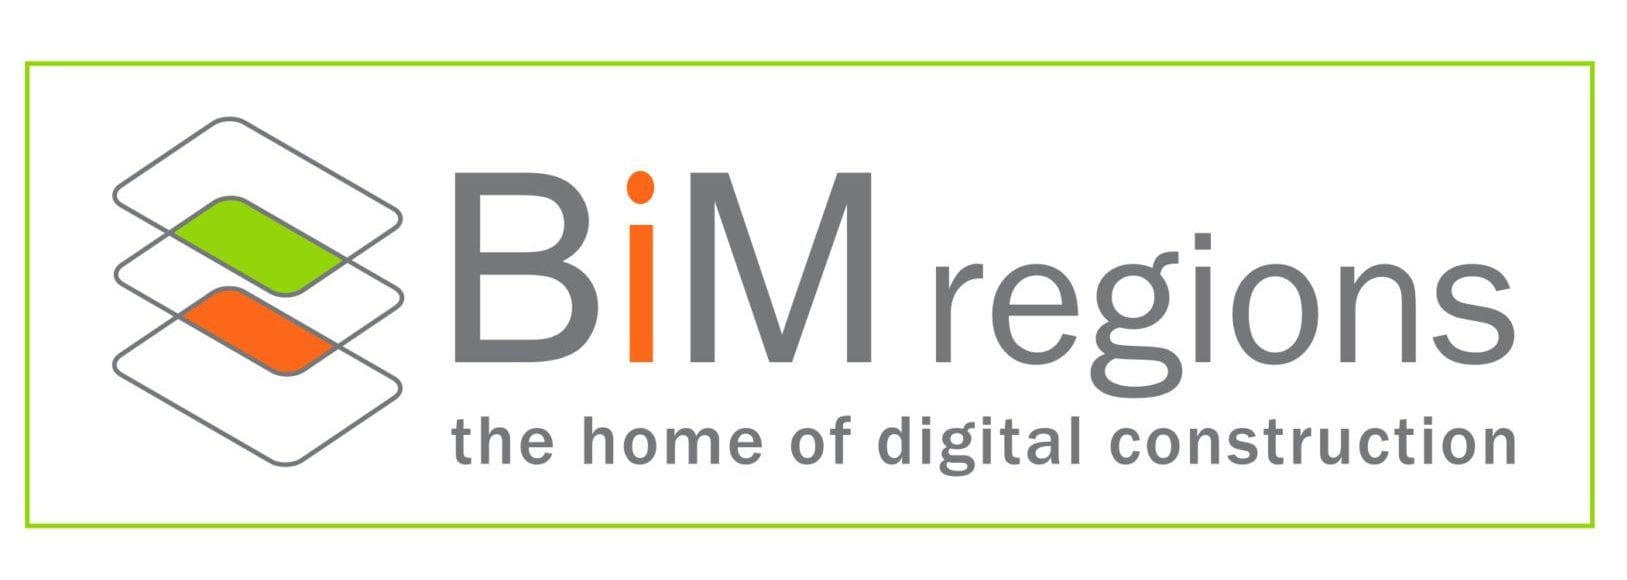 Bim Logo - BIM Regions Logo - Cita